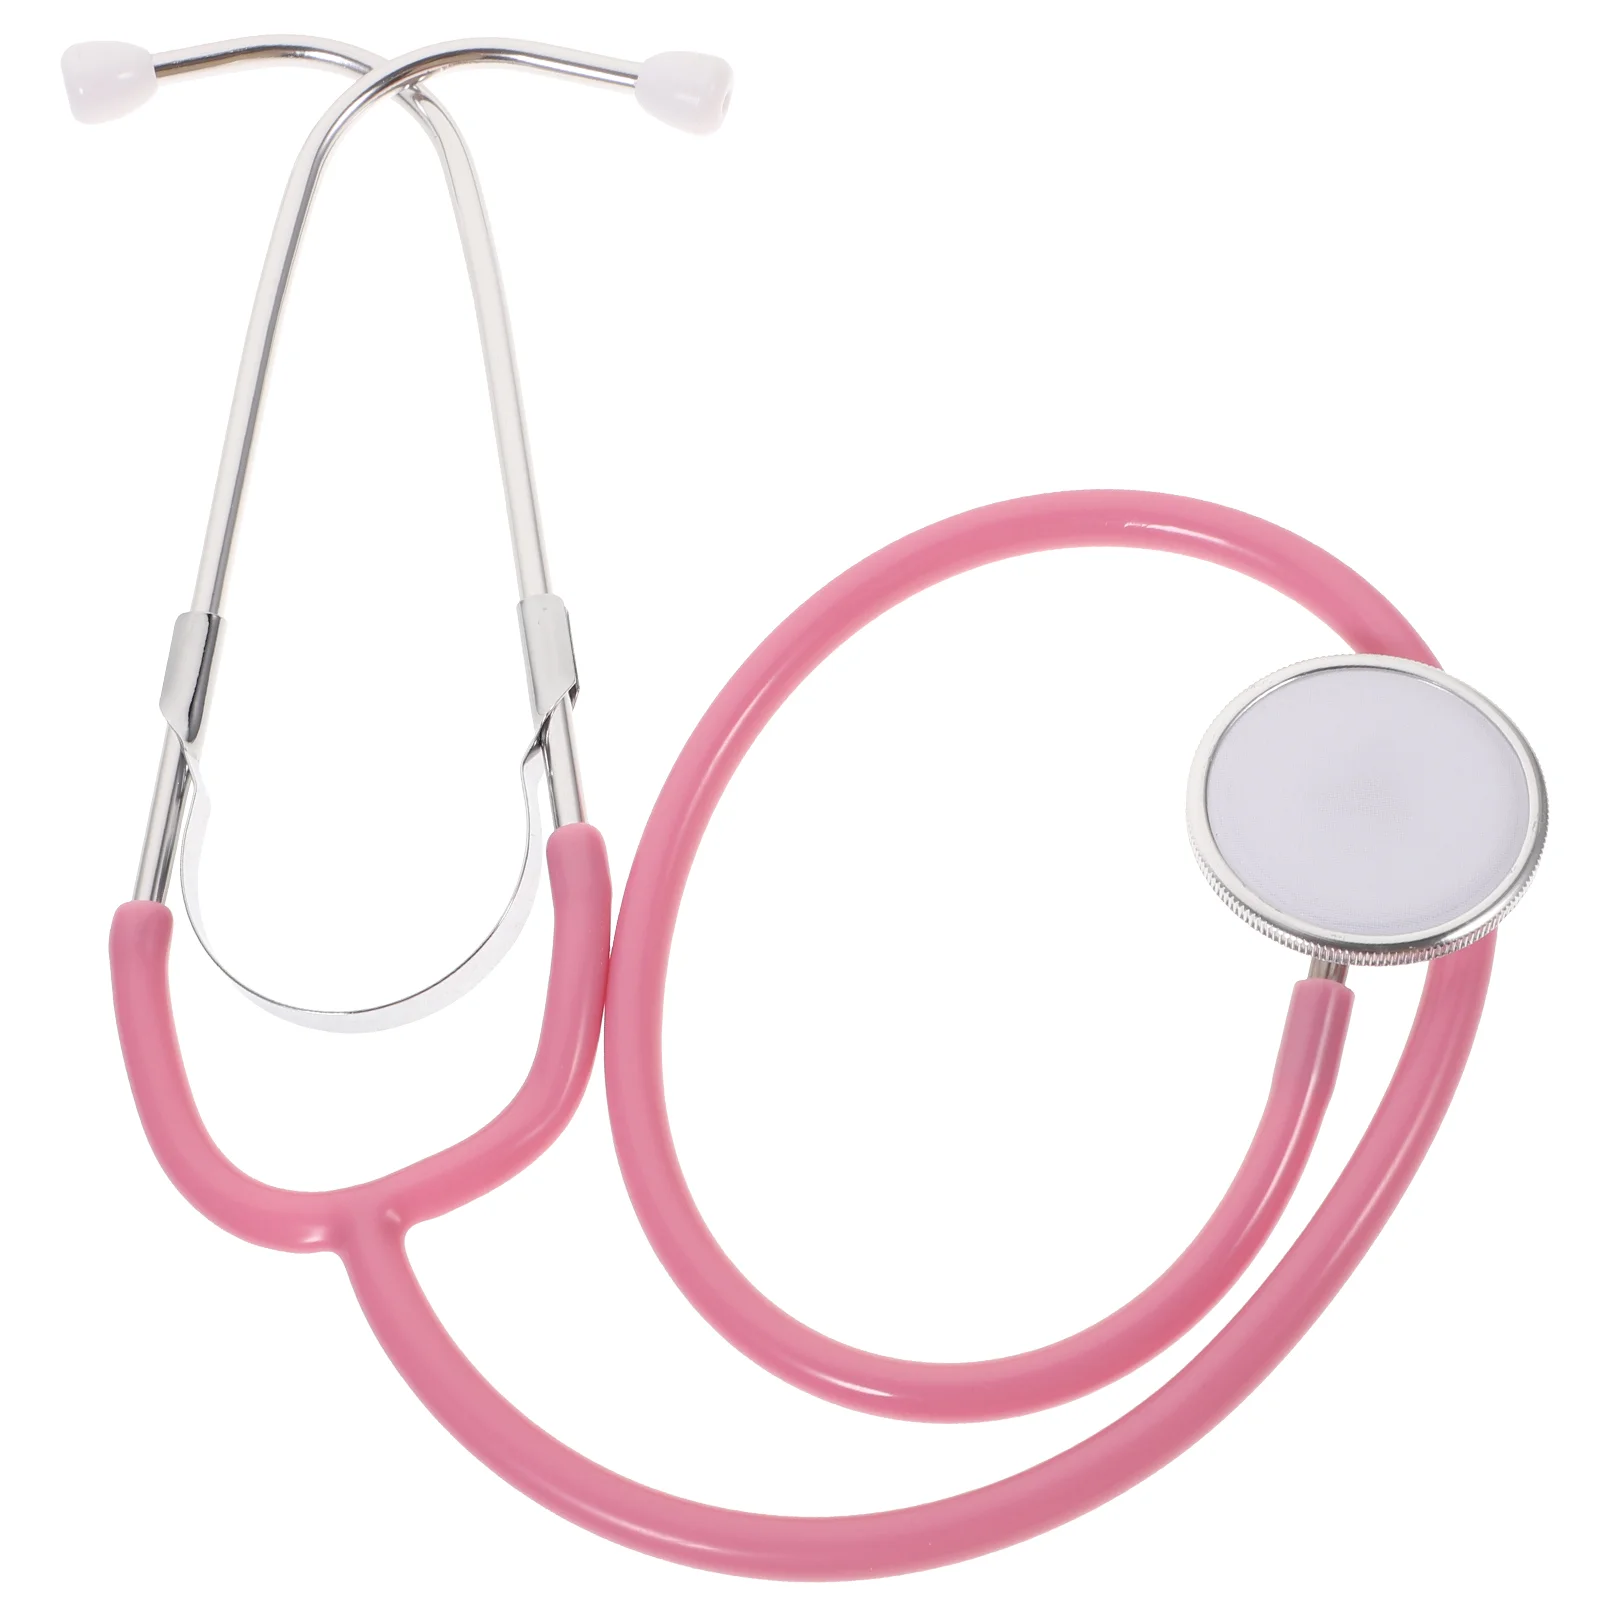 

Stethoscope Kids Toy Toys Children Play Simulation Pretend Playing Kit Nursing Role Working Real Virtual Equipment Nurse Single